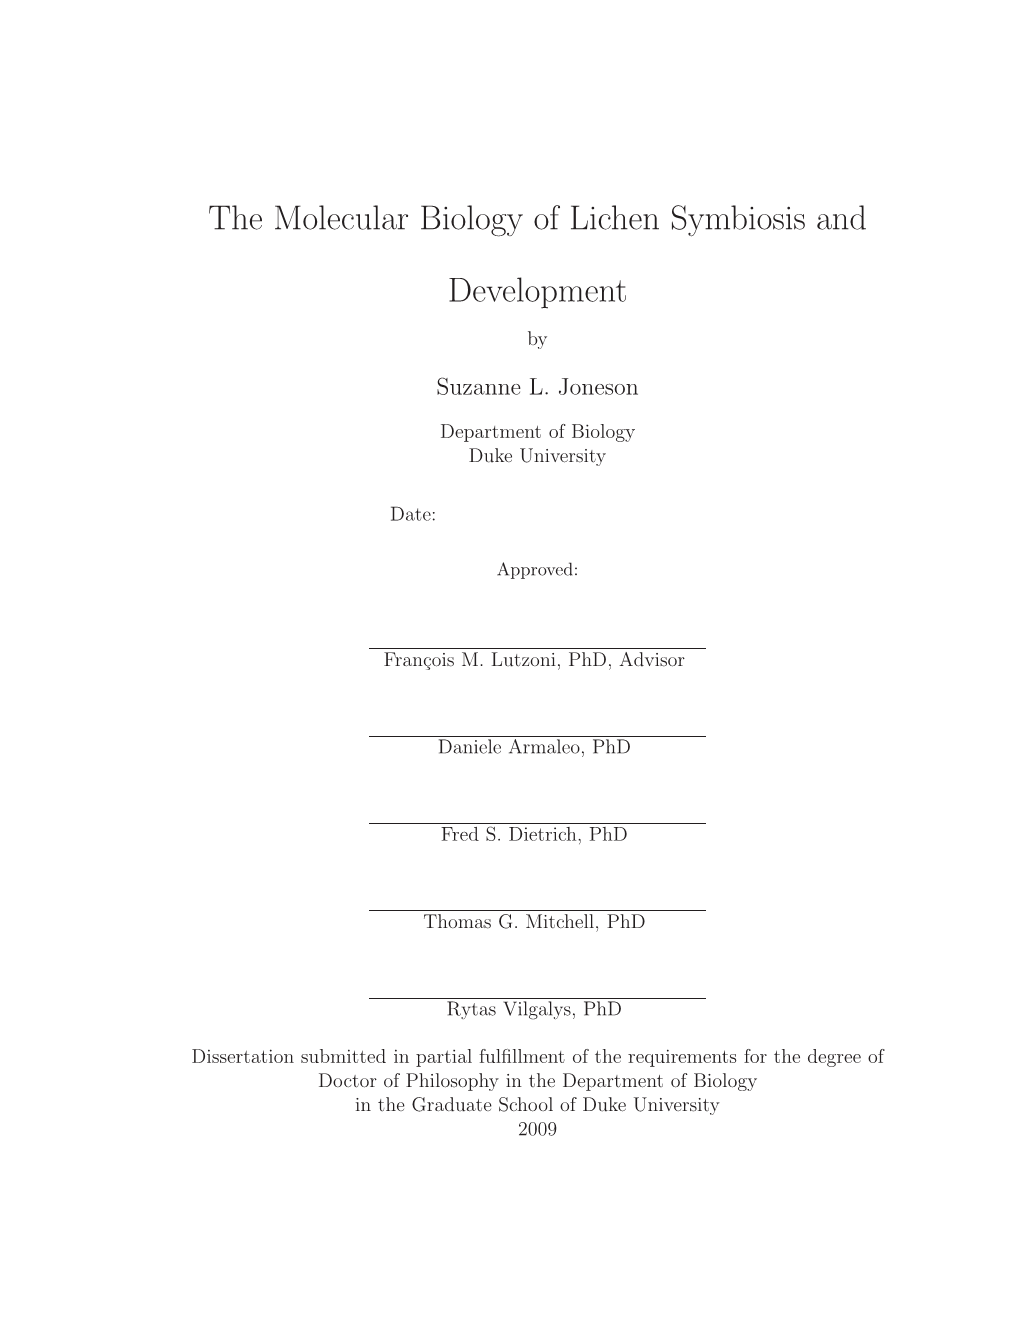 The Molecular Biology of Lichen Symbiosis and Development